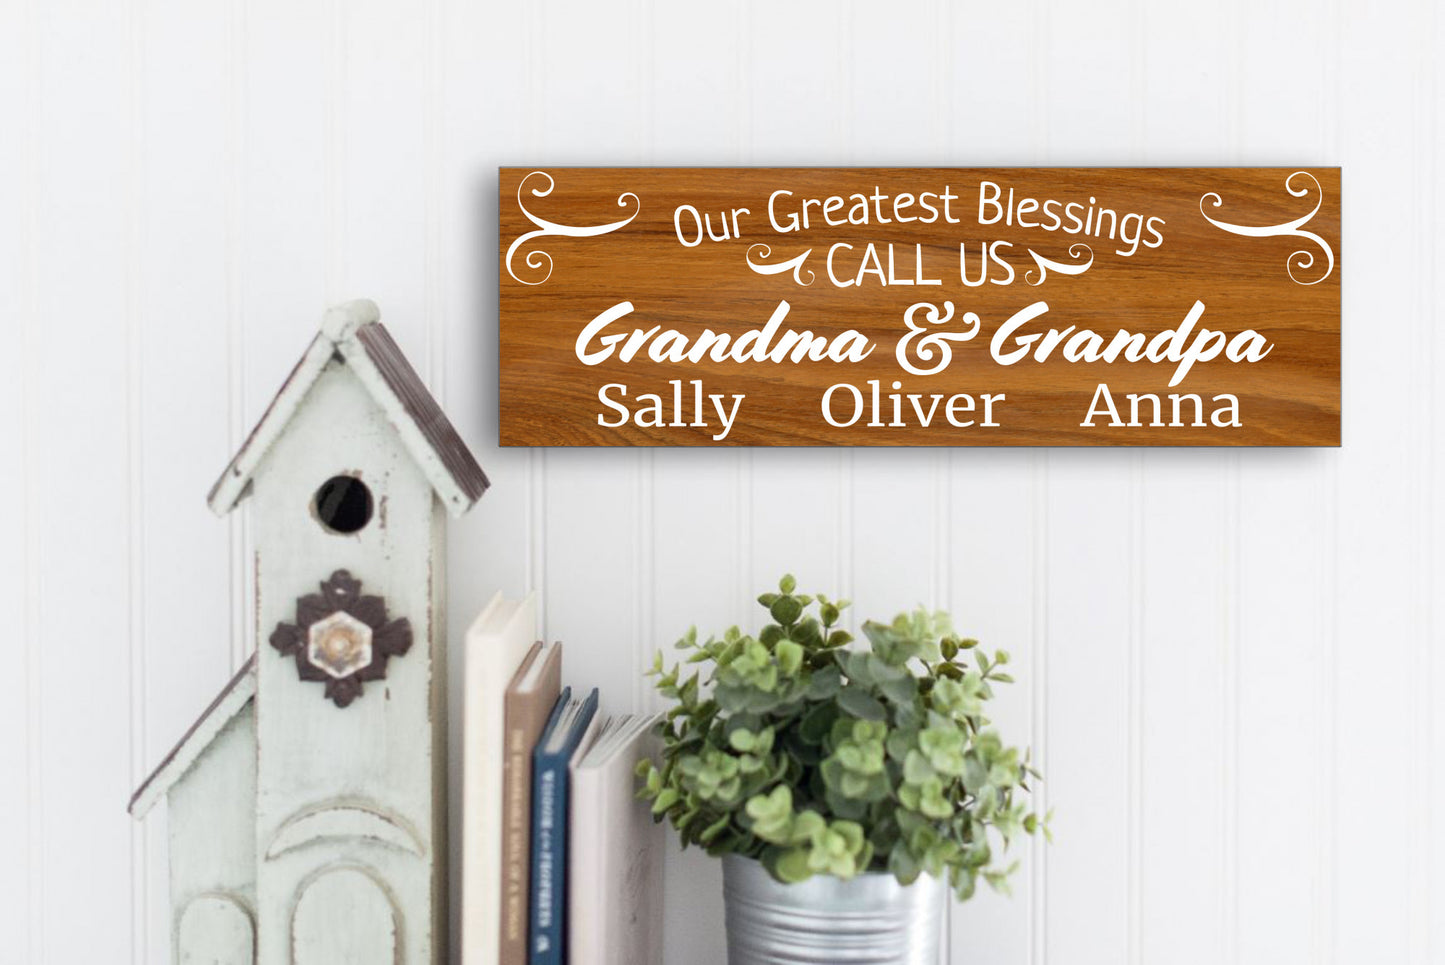 Our Greatest Blessings Call Us Grandma & Grandpa